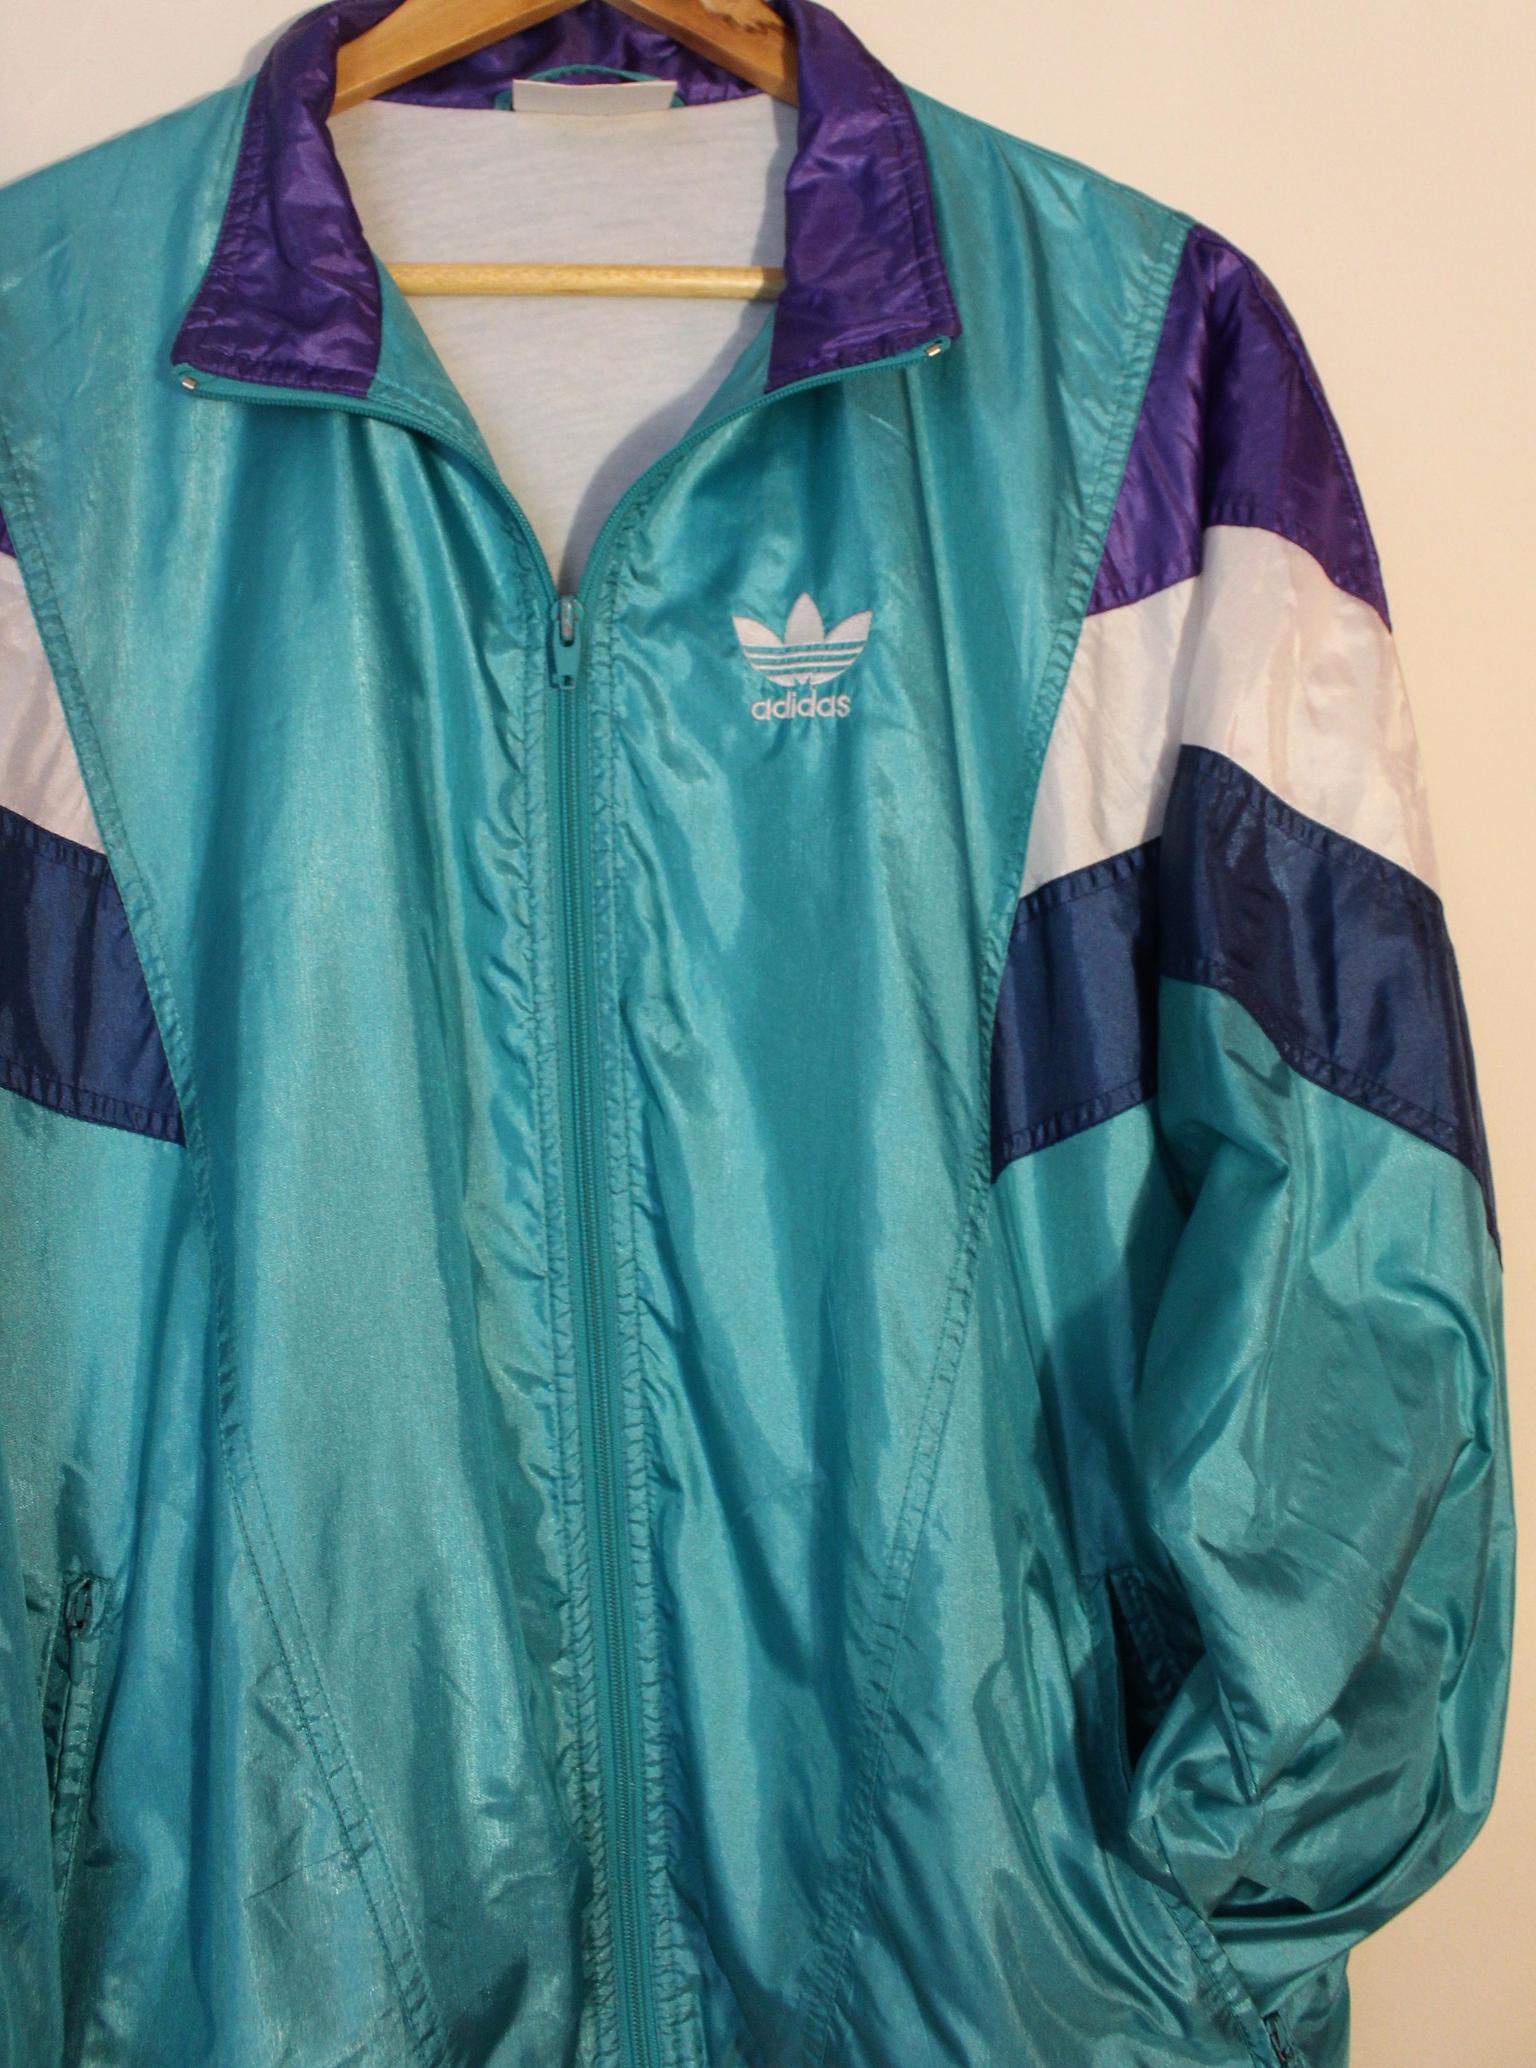 giacca adidas anni 90